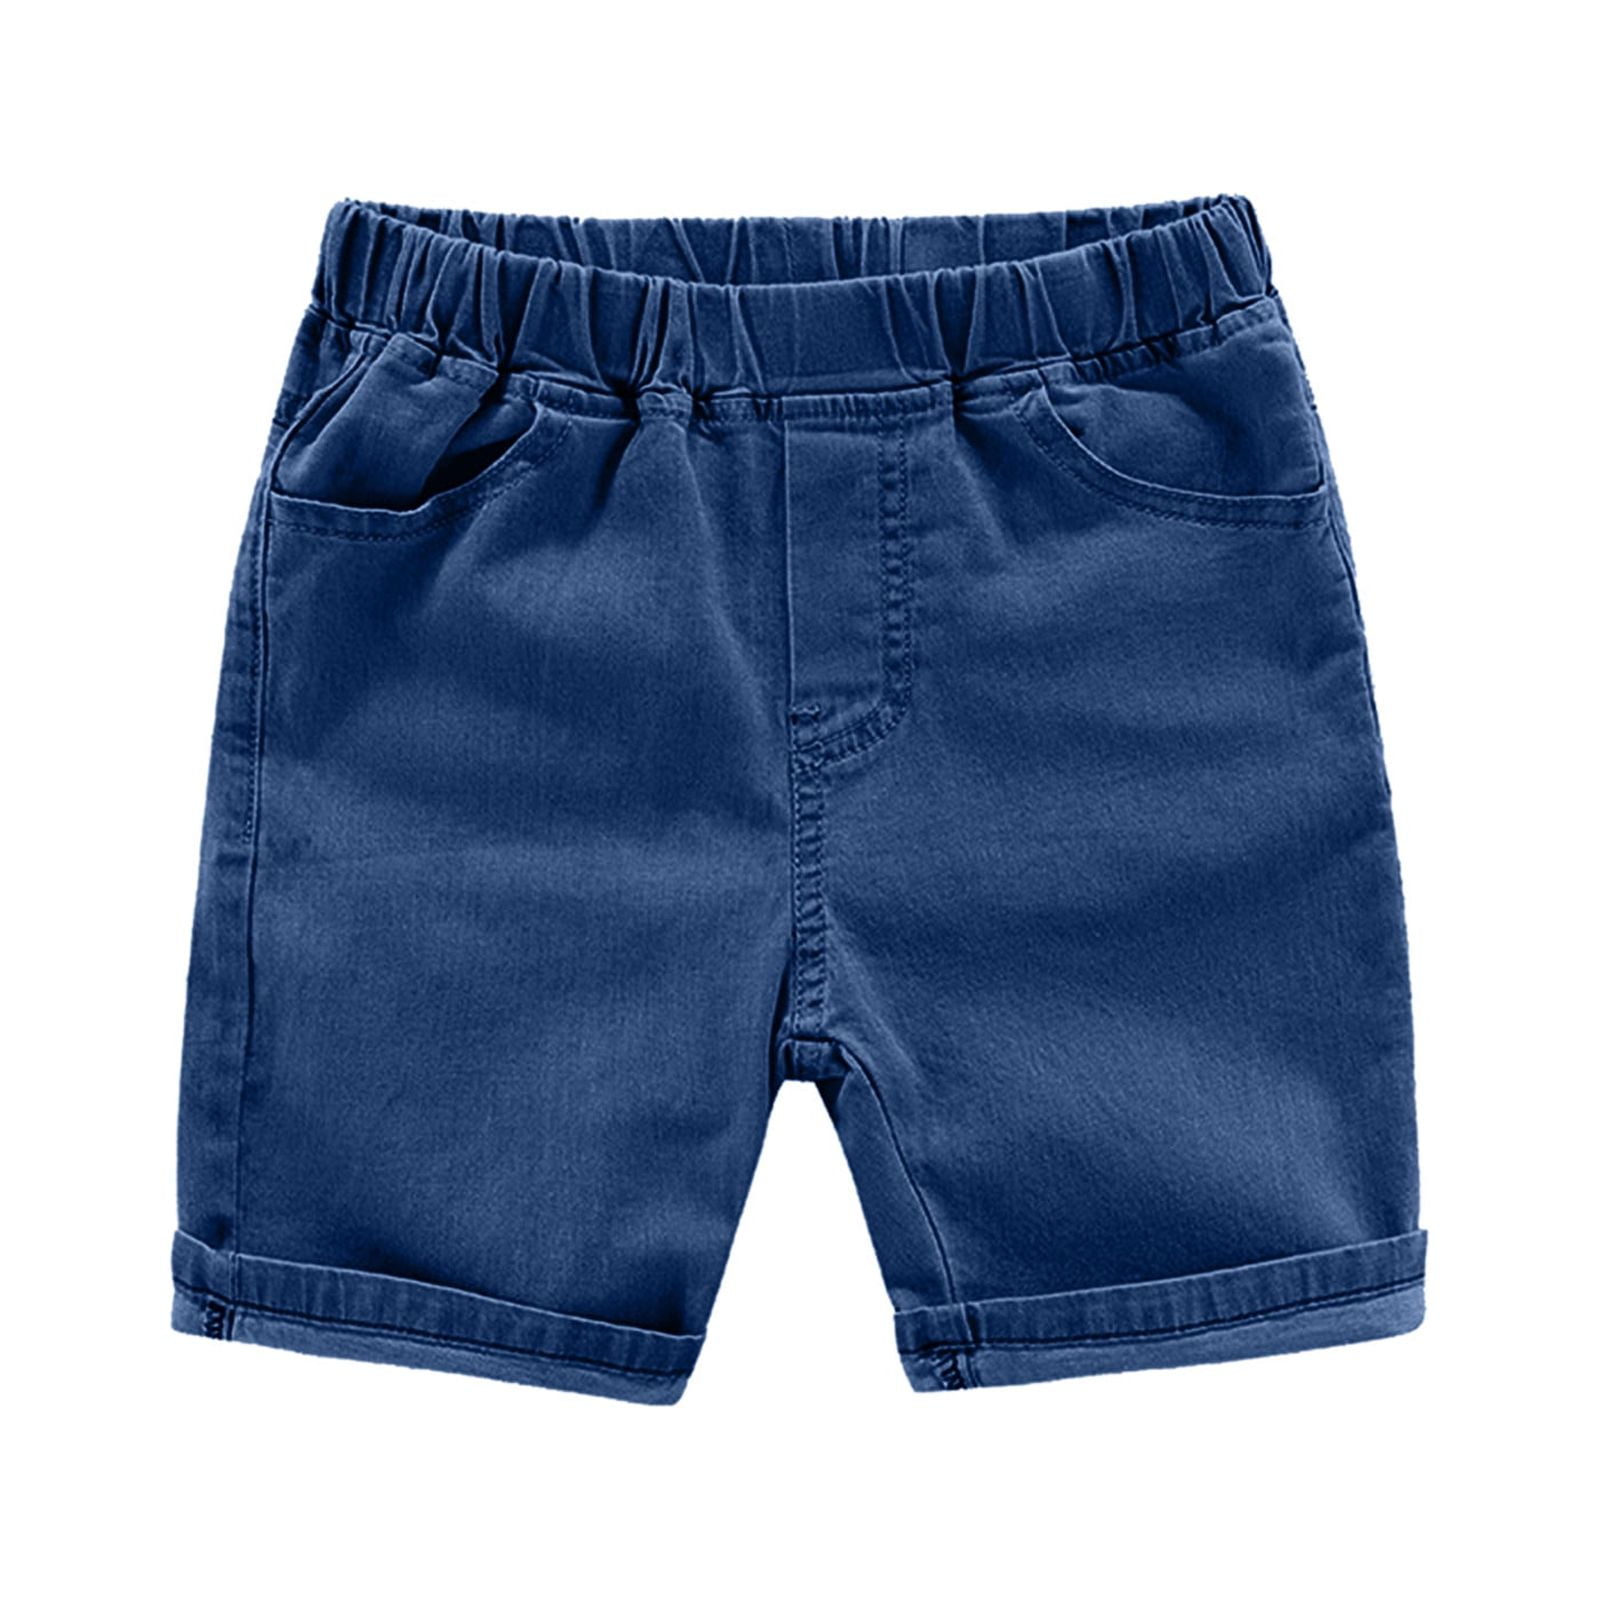 Hbdhejl Kids Pants Baby Boys Girls Toddler Chambray Jeans Pants Shorts ...